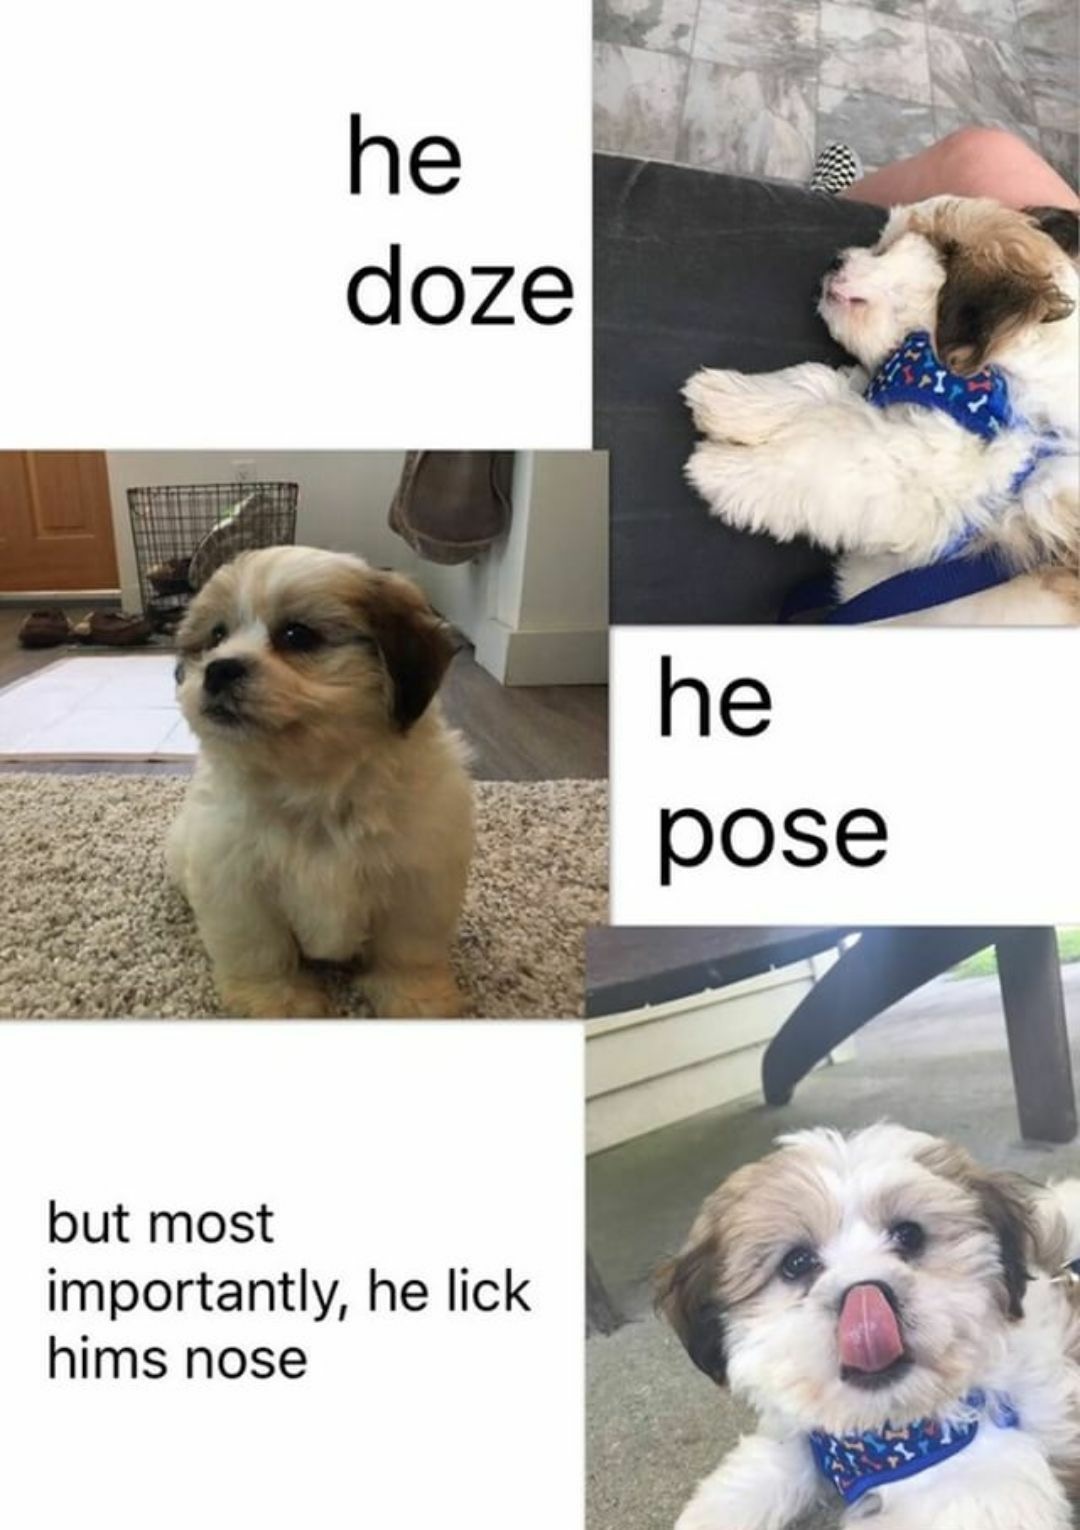 Cute dog meme